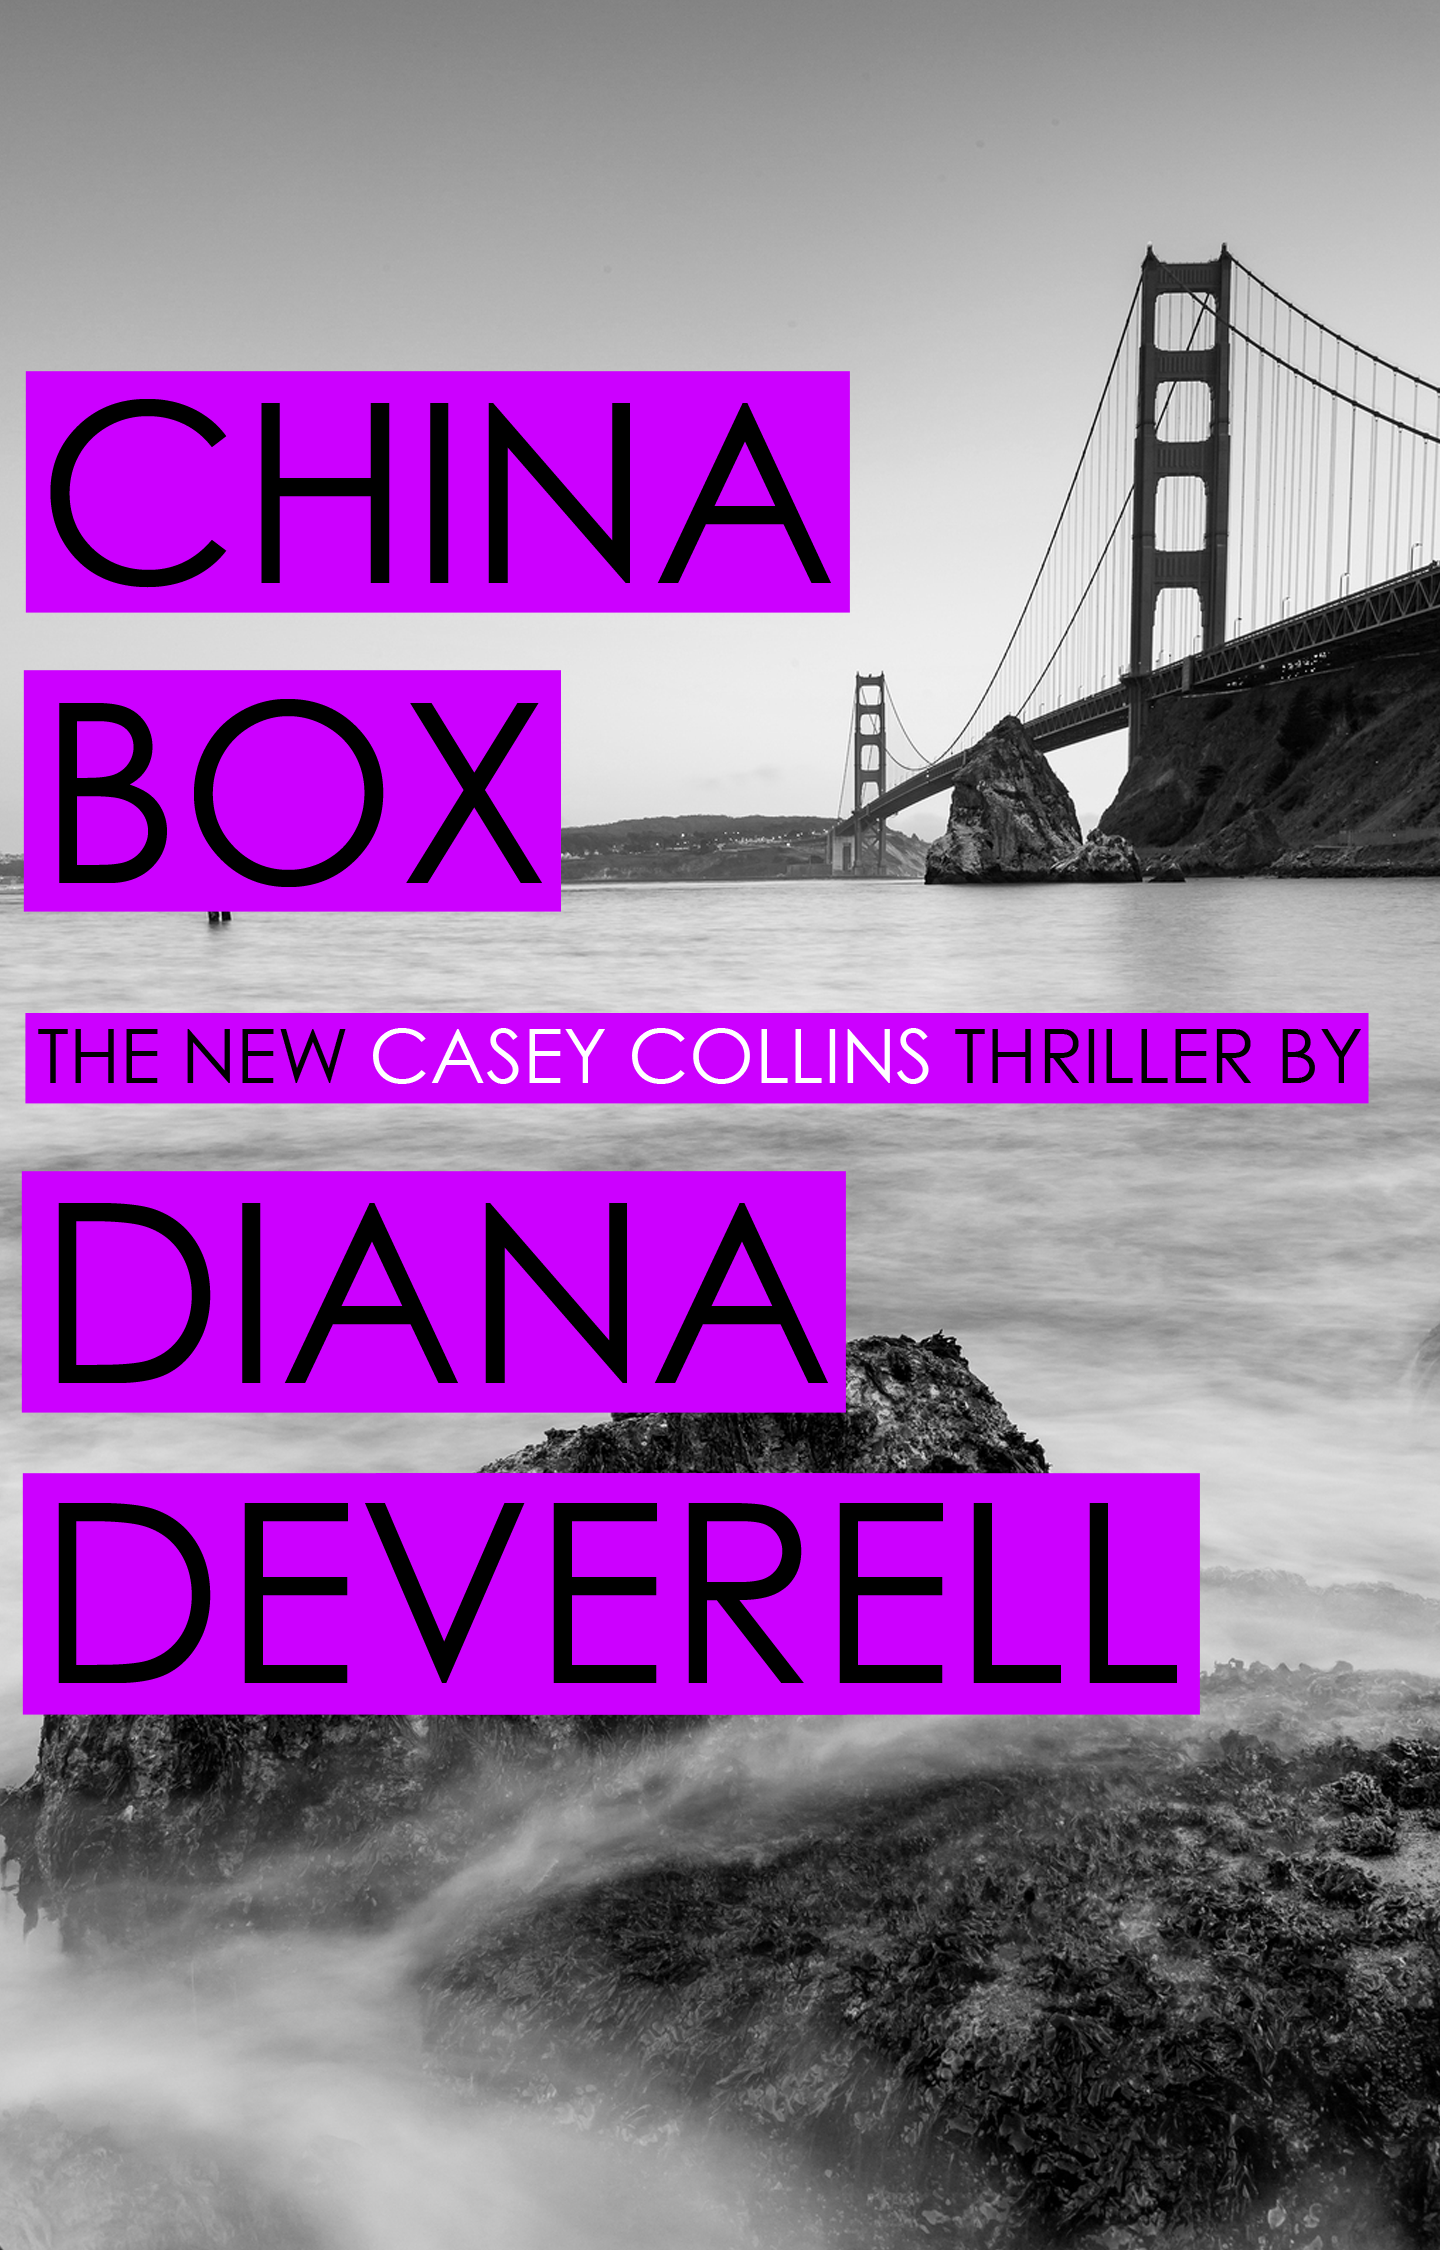 China Box by Diana Deverell